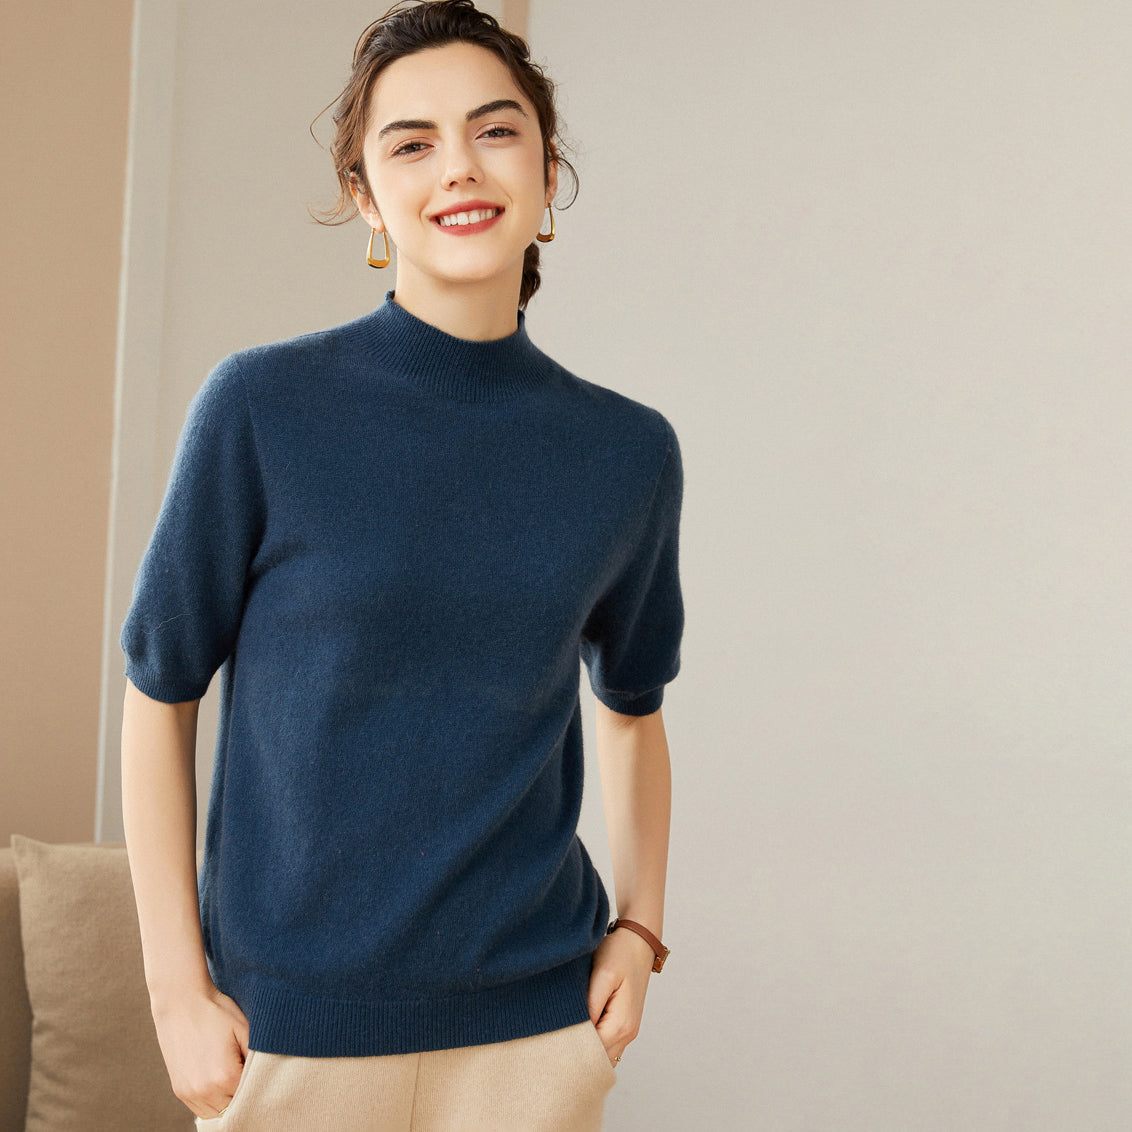 Women's 100% Pure Cashmere Sweater Crewneck Cashmere Tops Lightweight Short Sleeve Cashmere Sweater